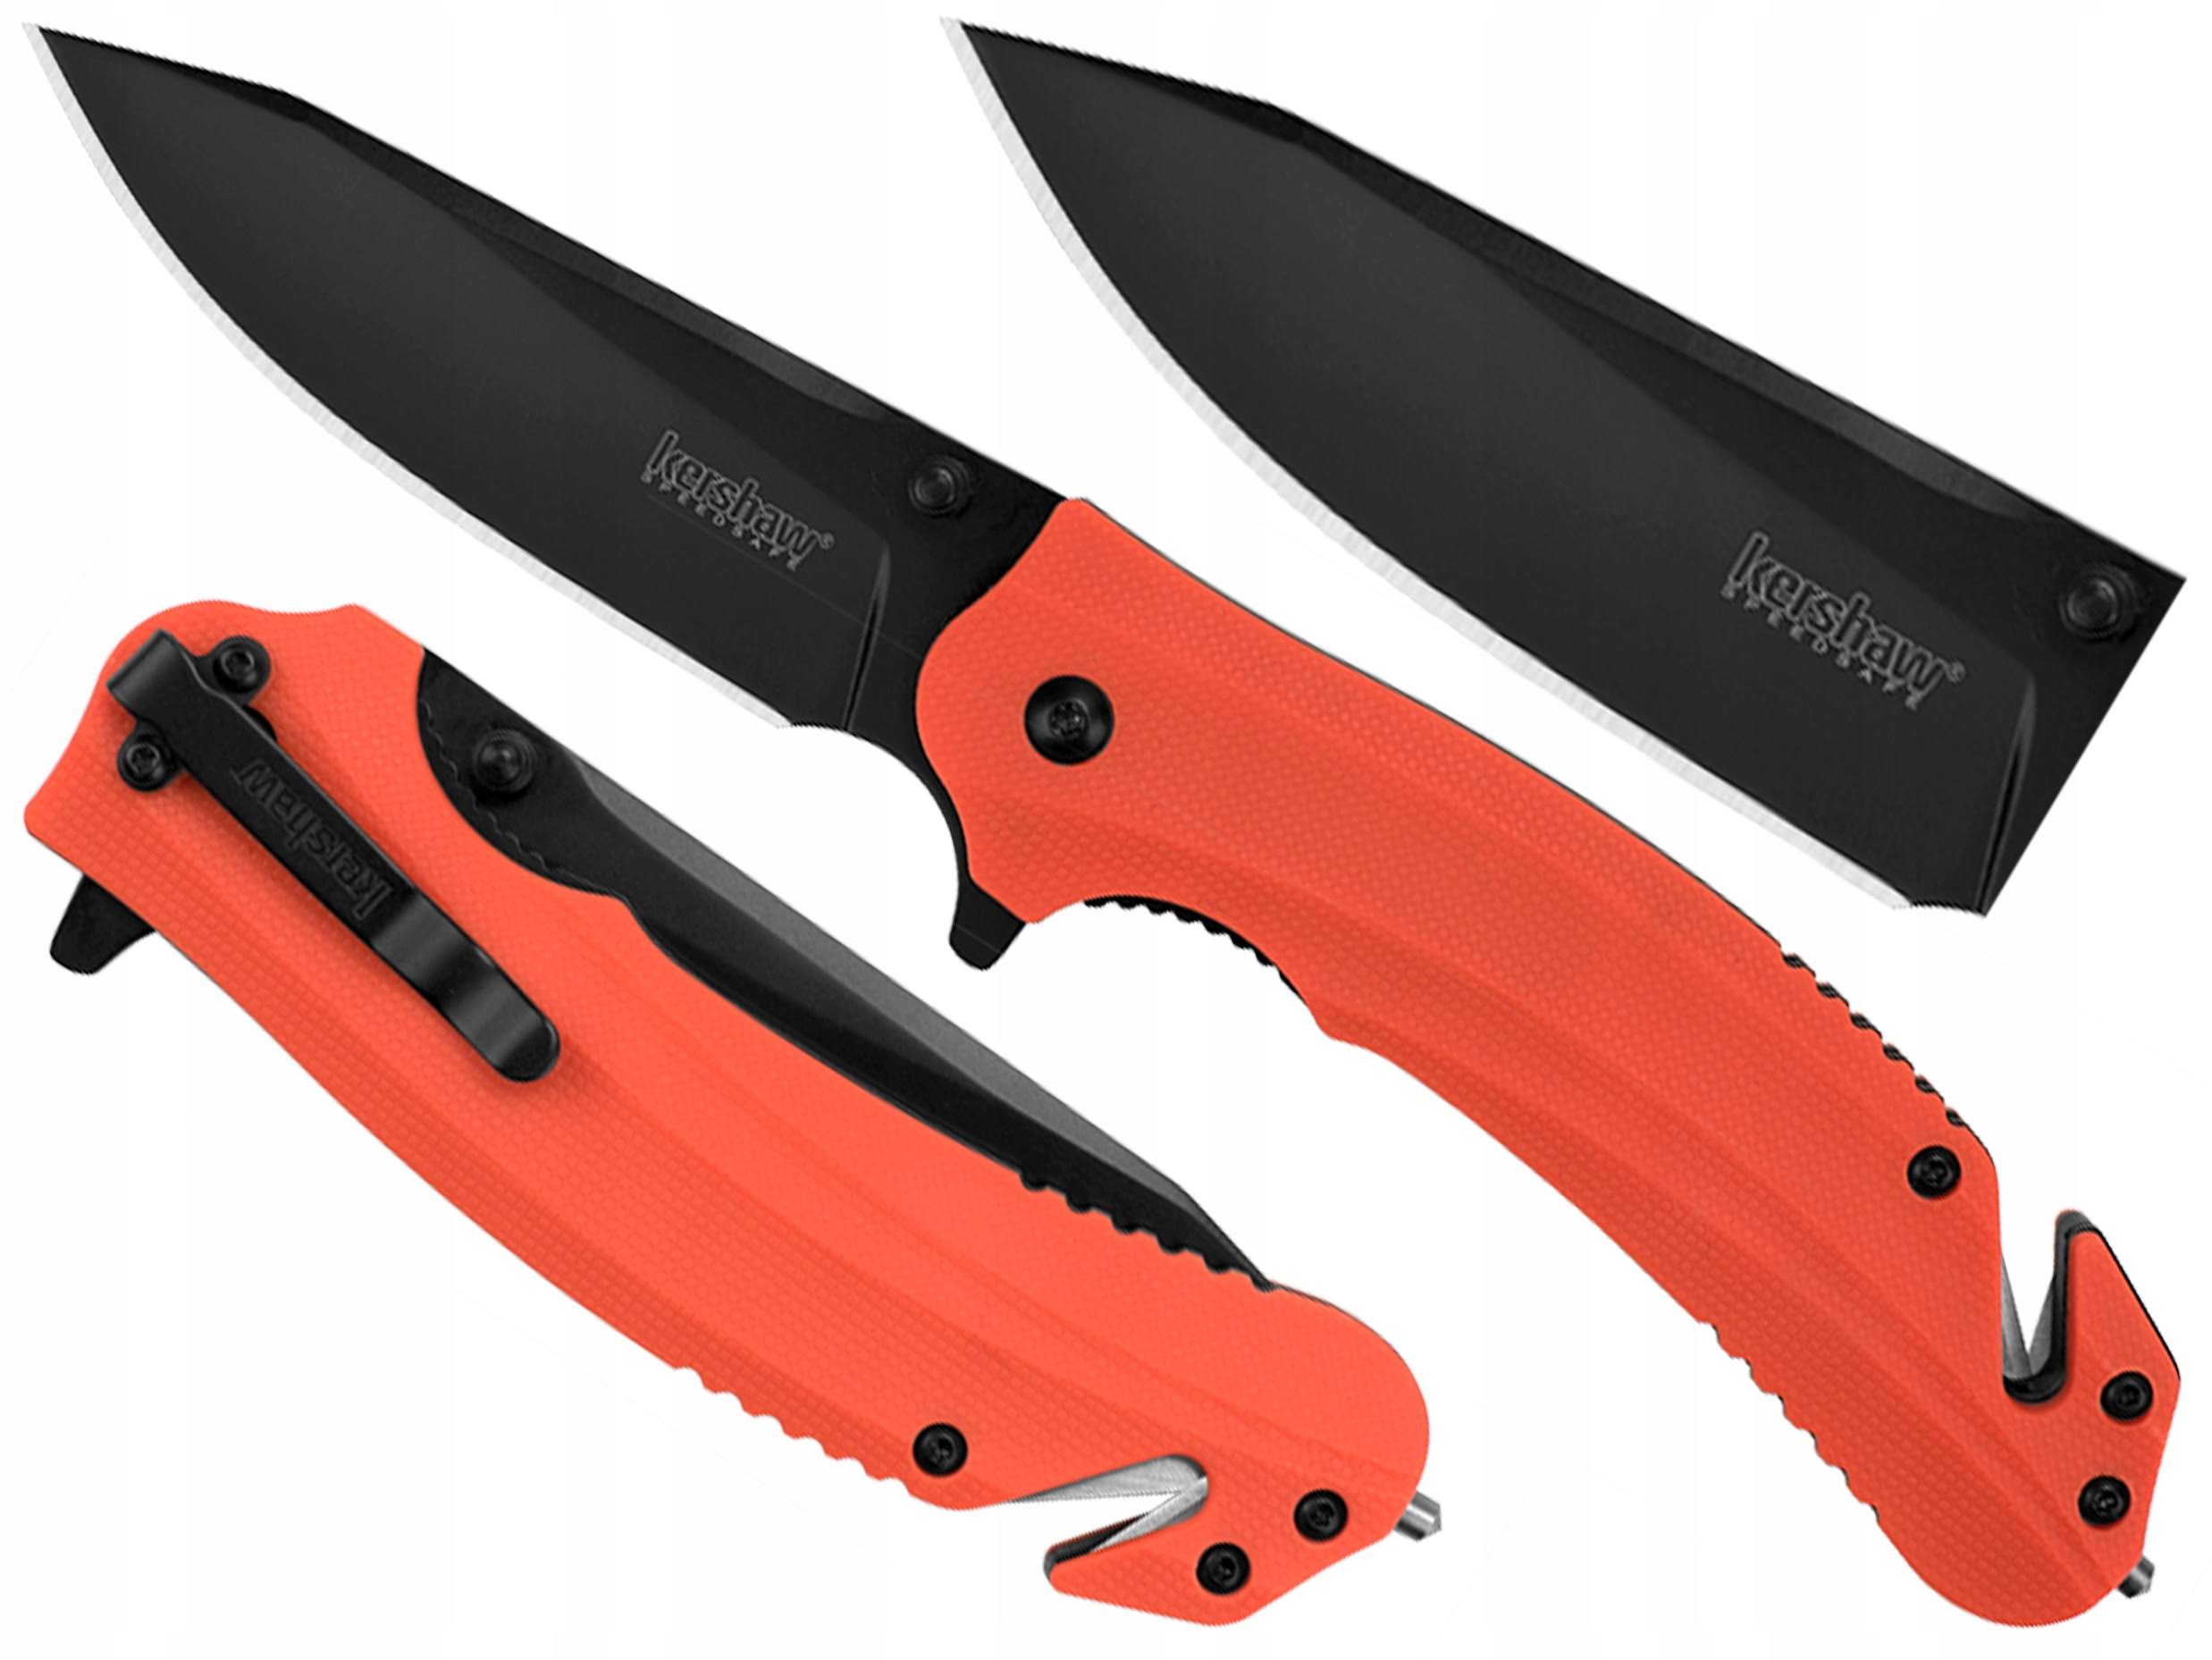 Kershaw Barricade Survival Assisted Folding Knife - Orange and Black